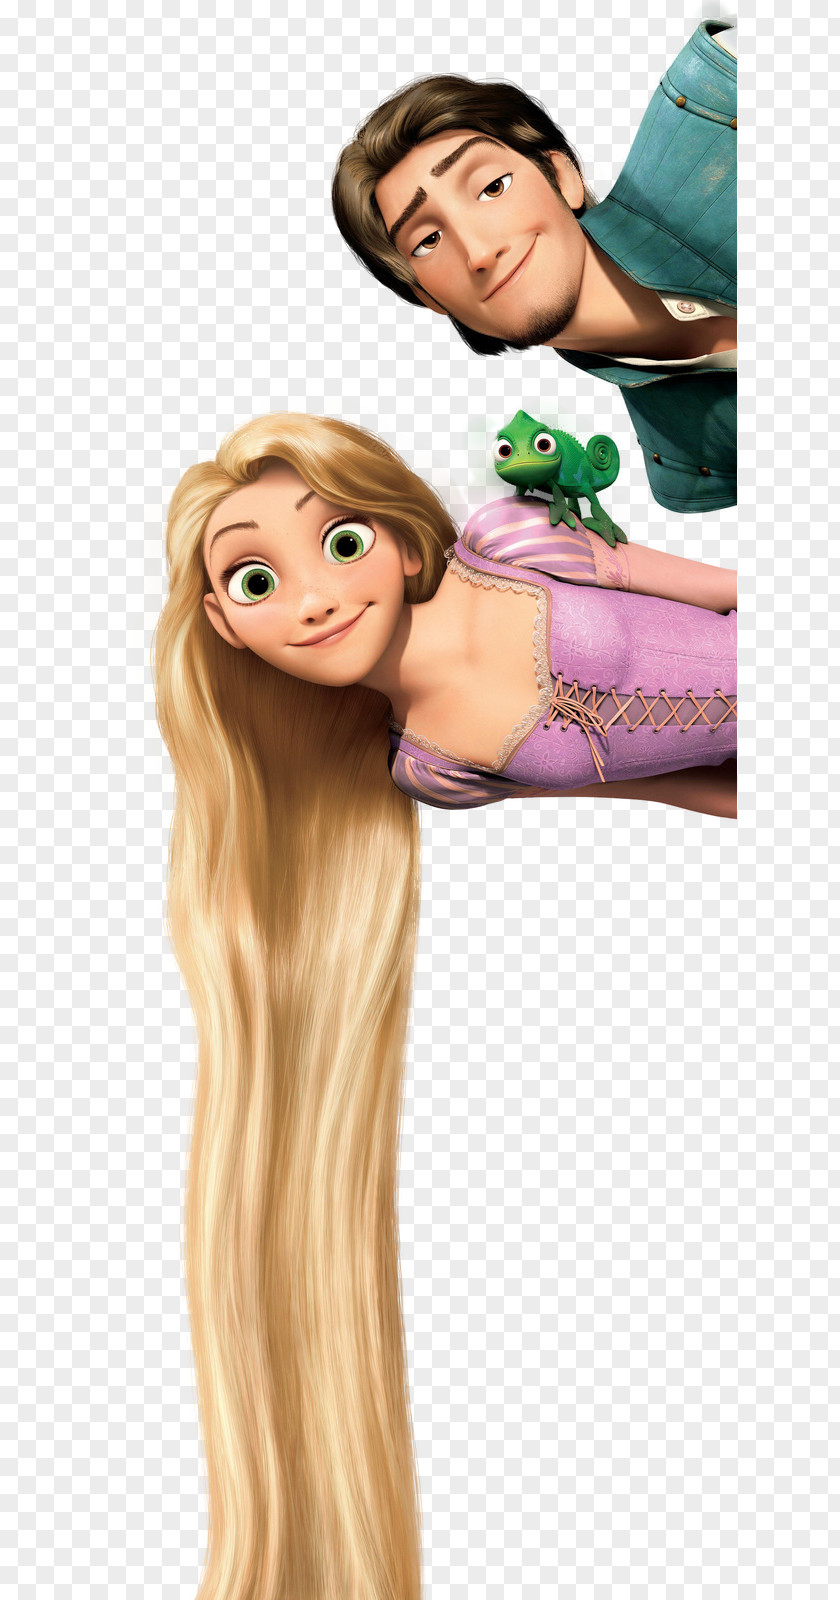 Disney Princess Tangled: The Video Game Rapunzel Flynn Rider Gothel PNG